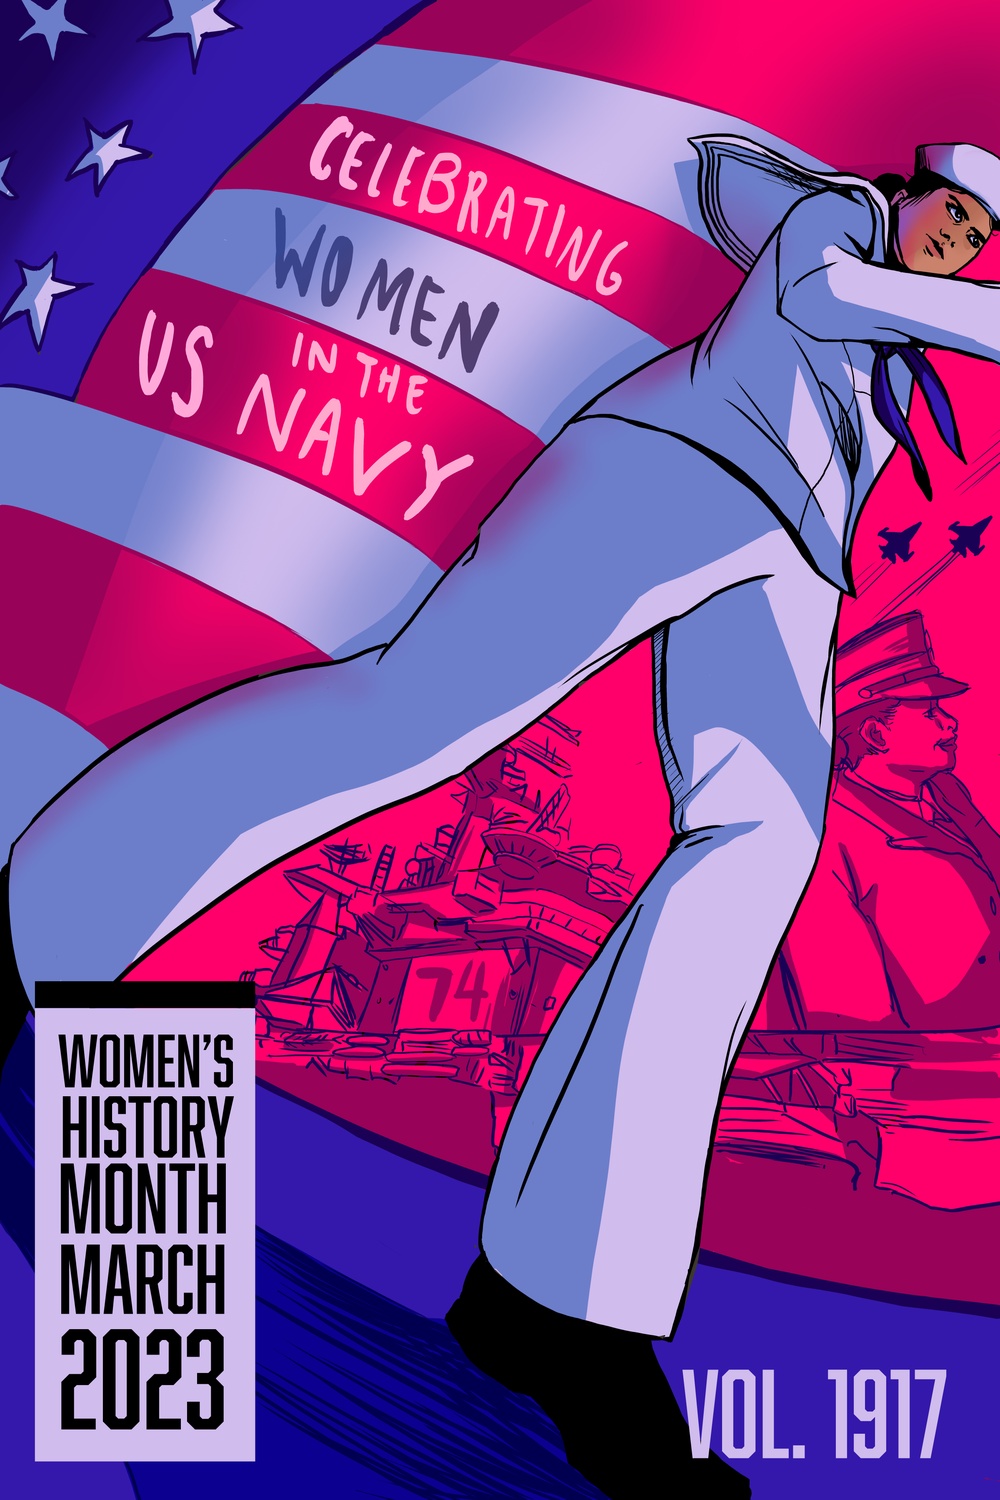 Celebrating Women in the U.S. Navy